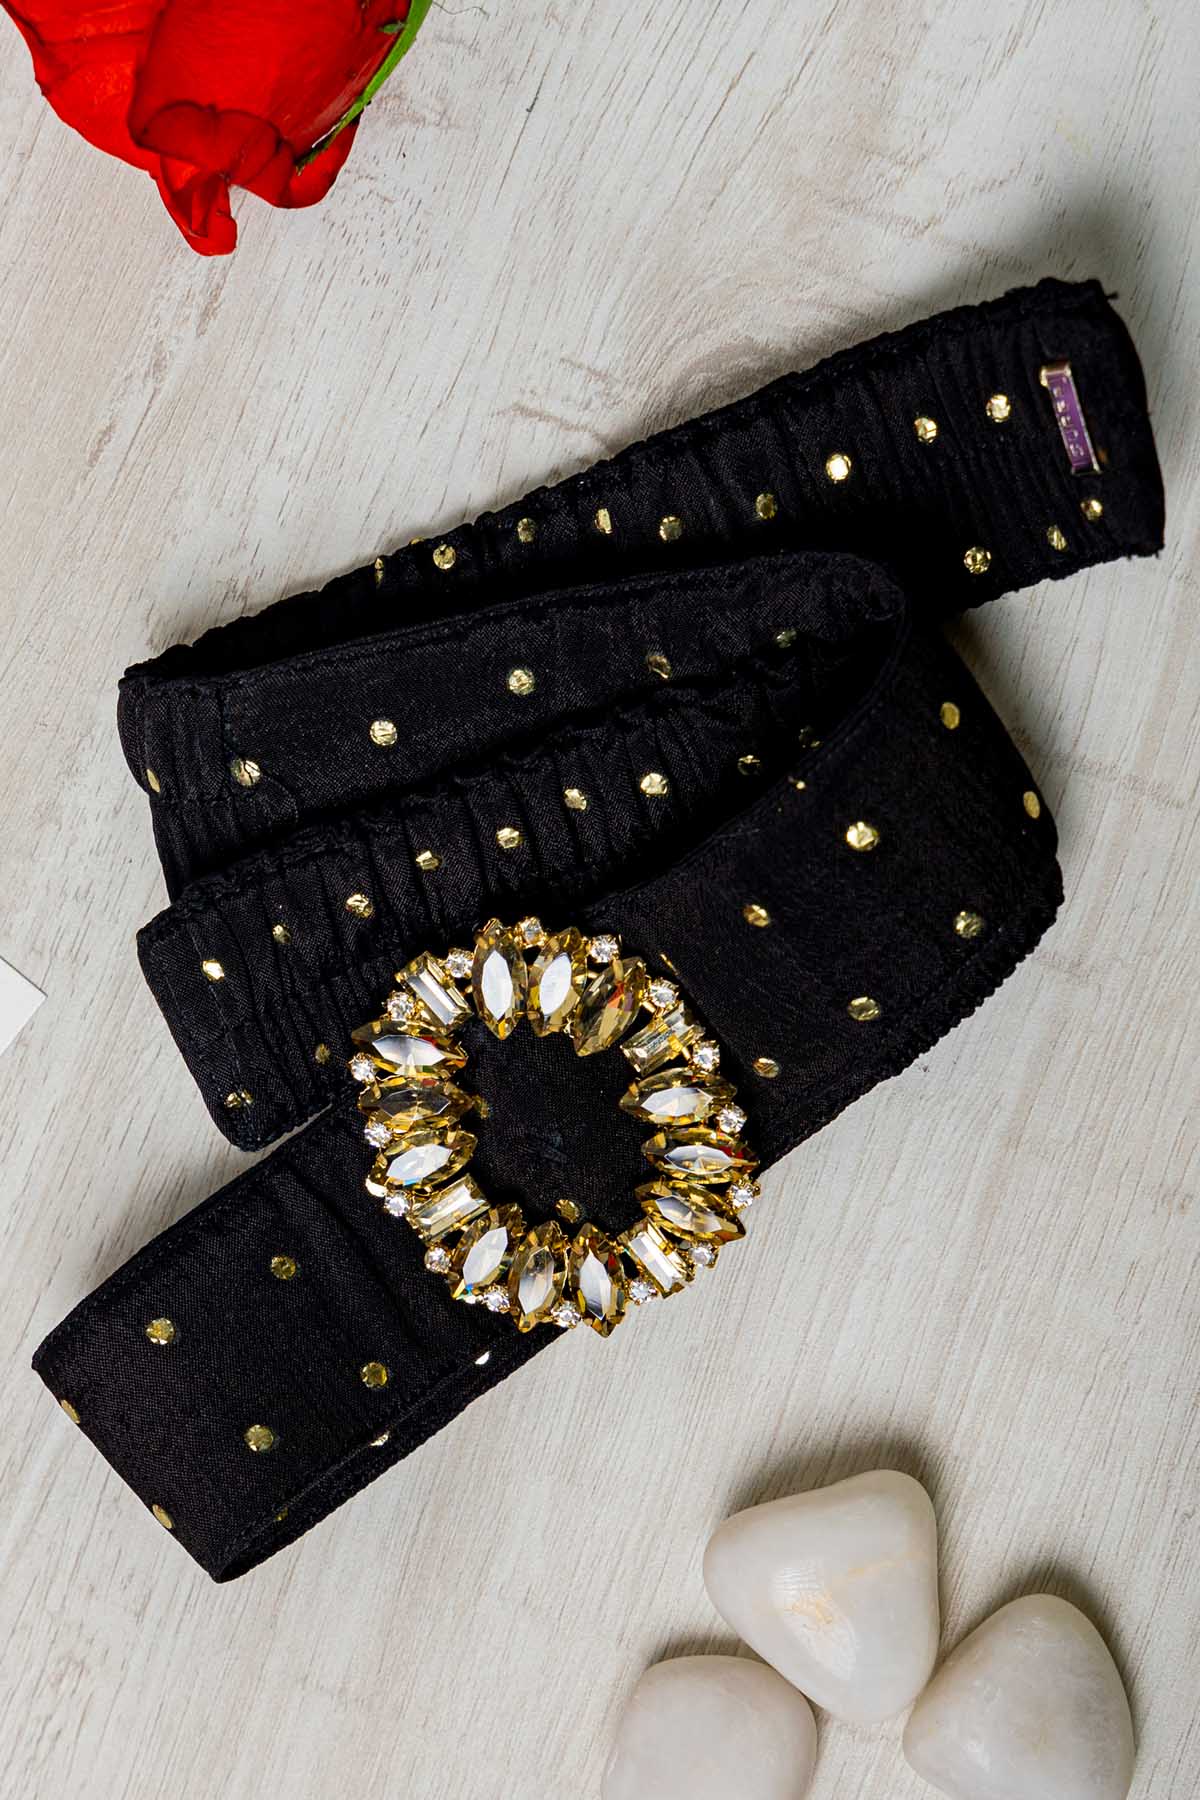 Etti Kapoor Black Embellished Broach Belt Accessories online at ScrollnShops